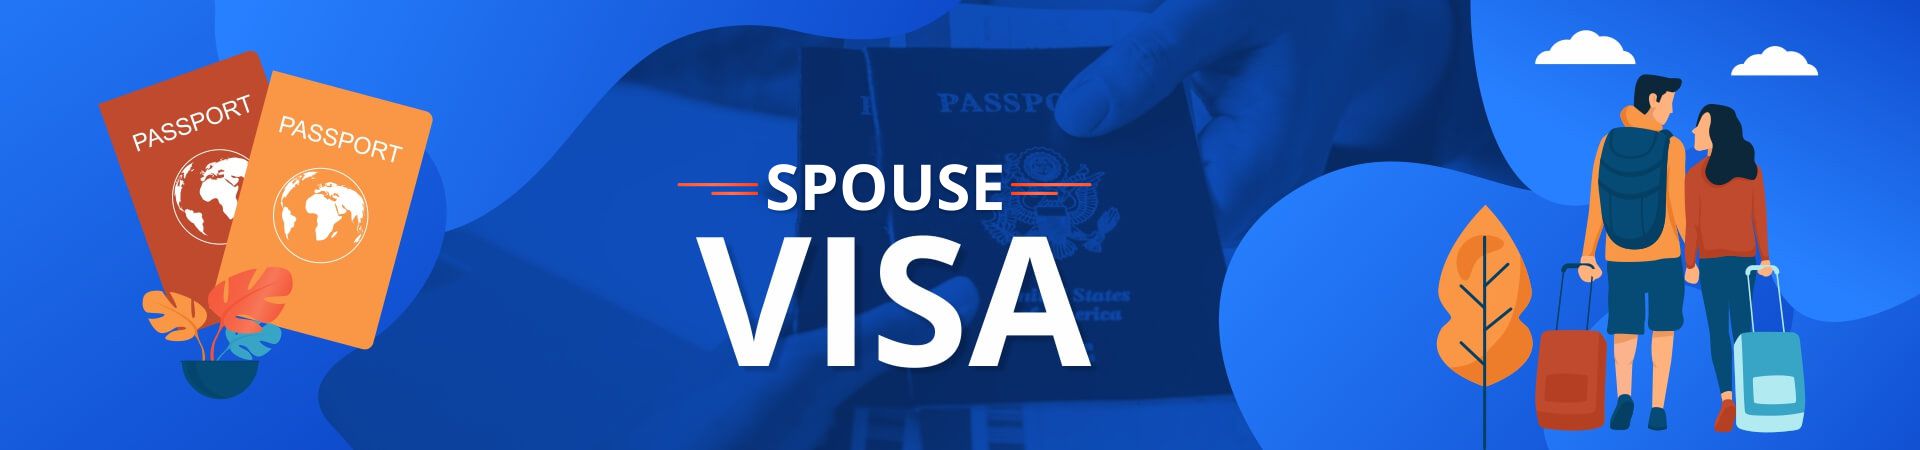 Spouse Visa Pyramid eServices